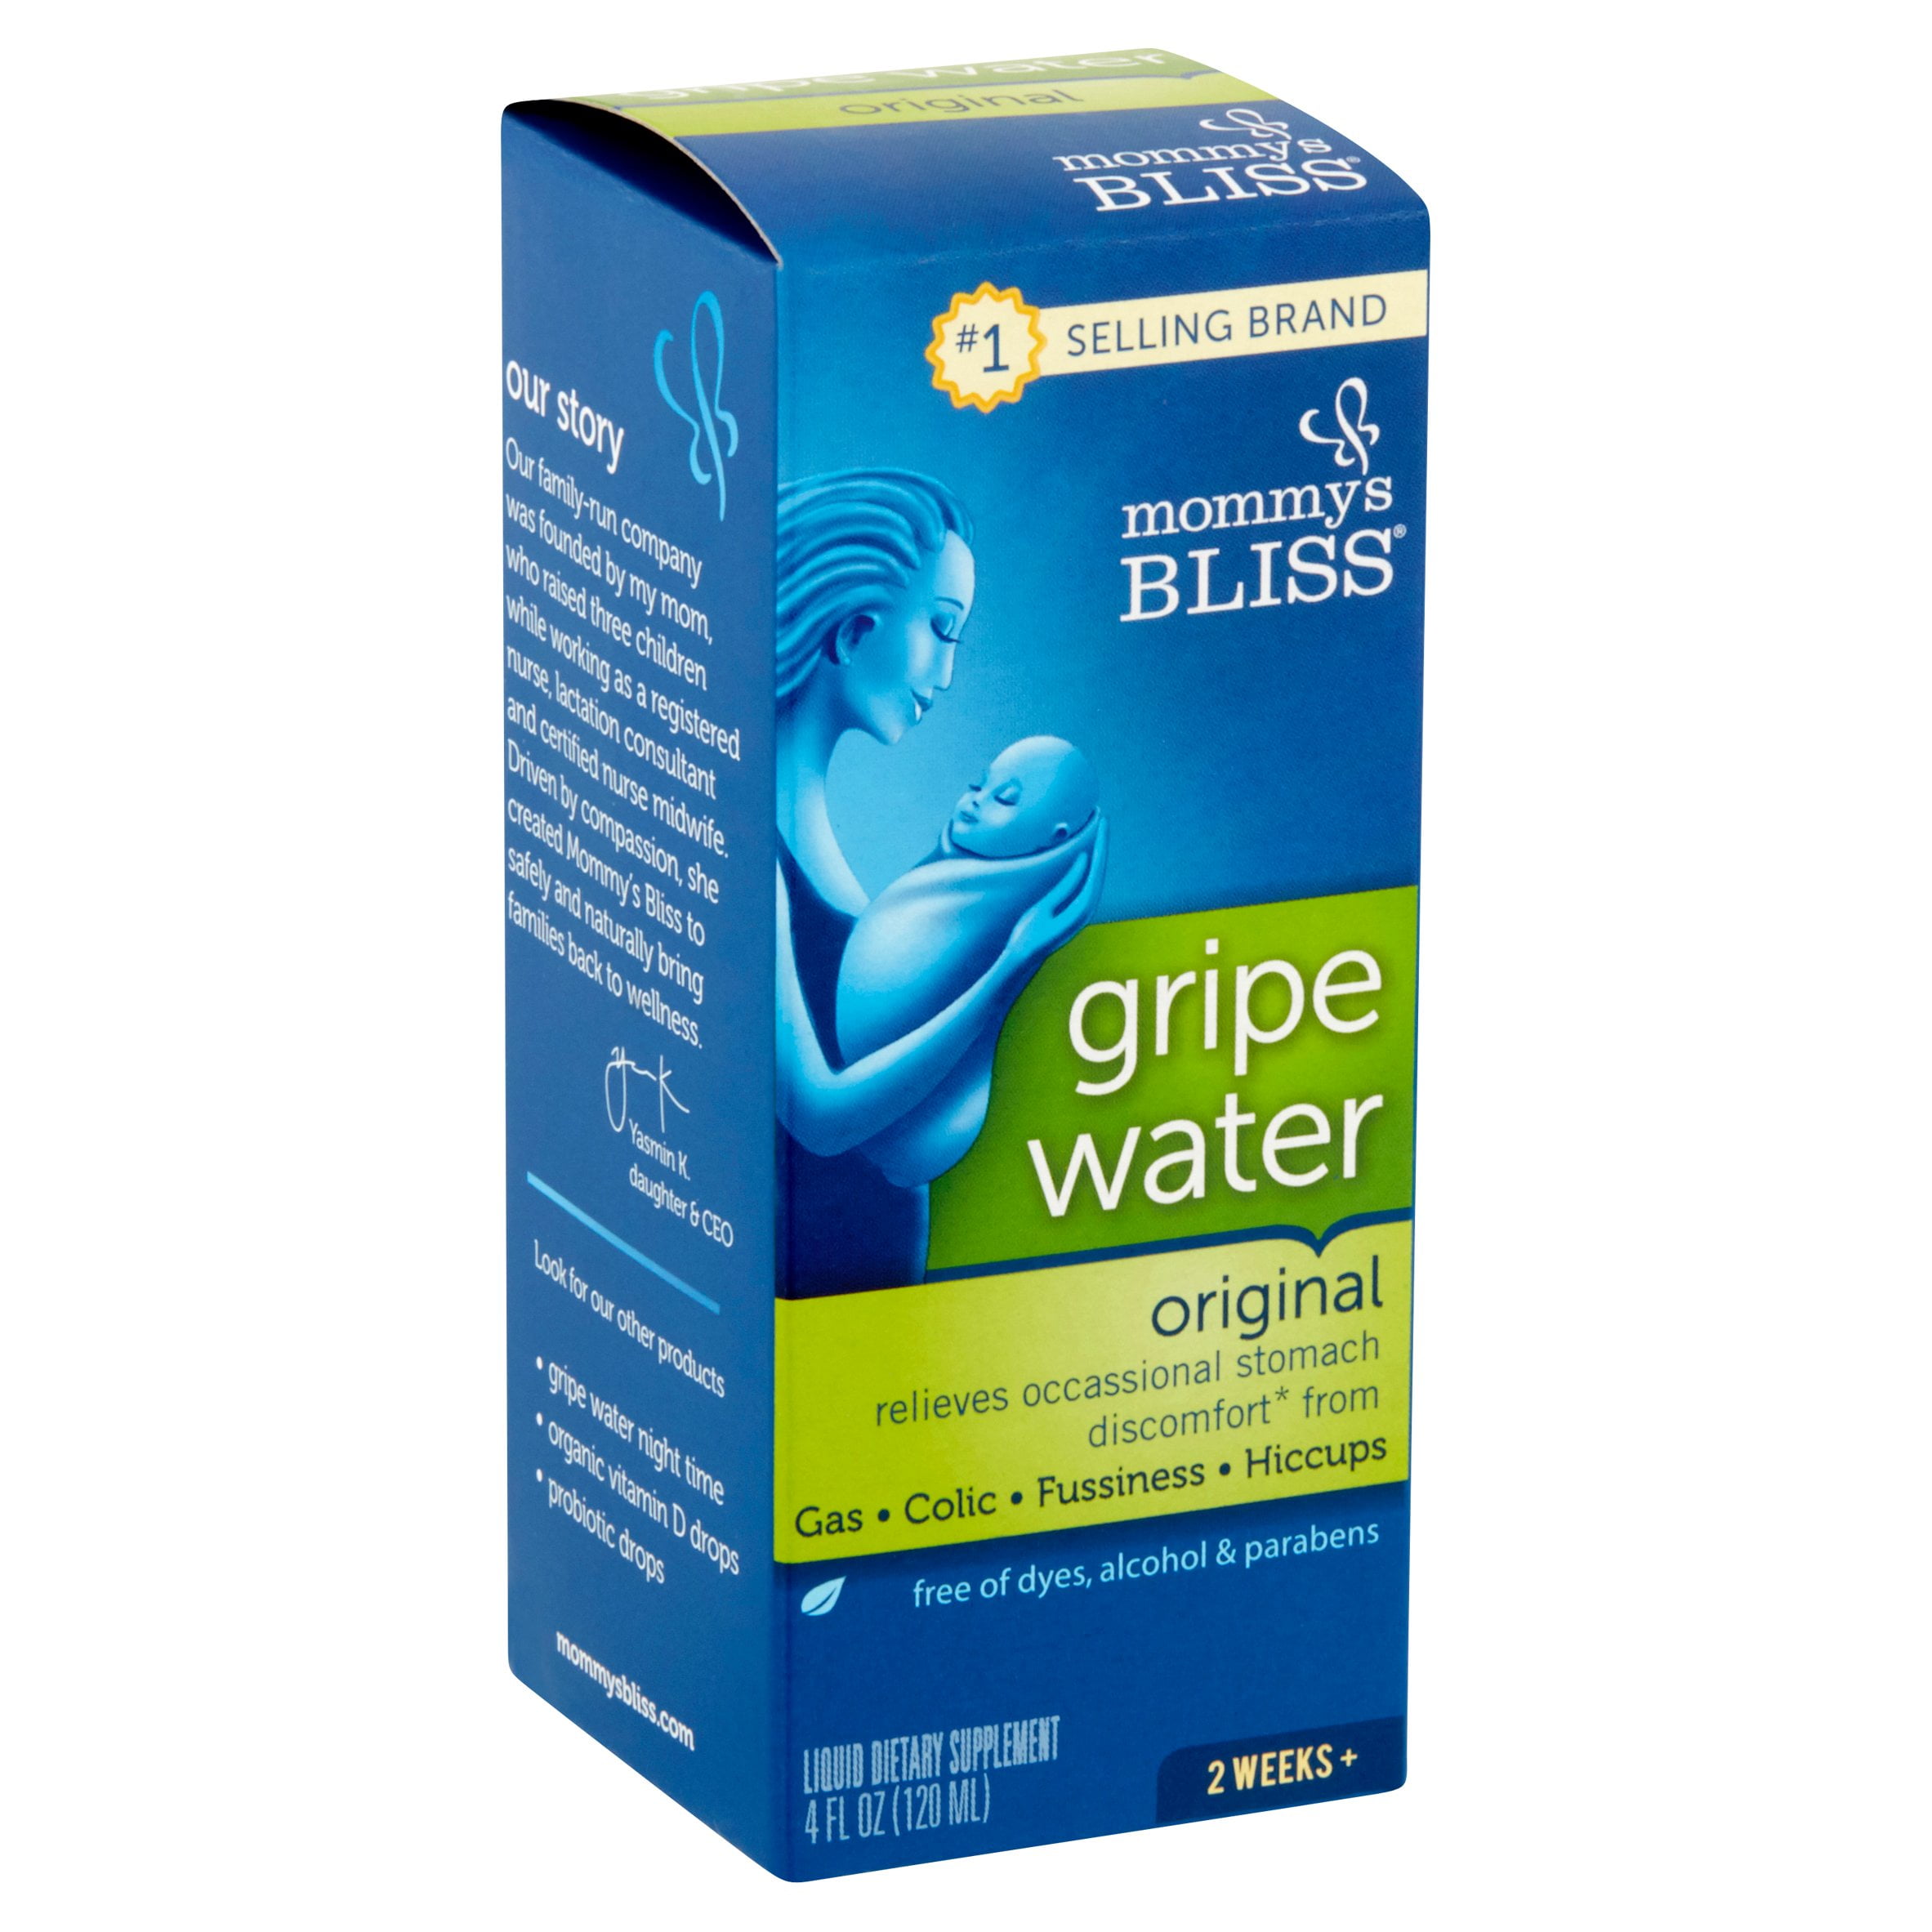 gripe water for gas newborn